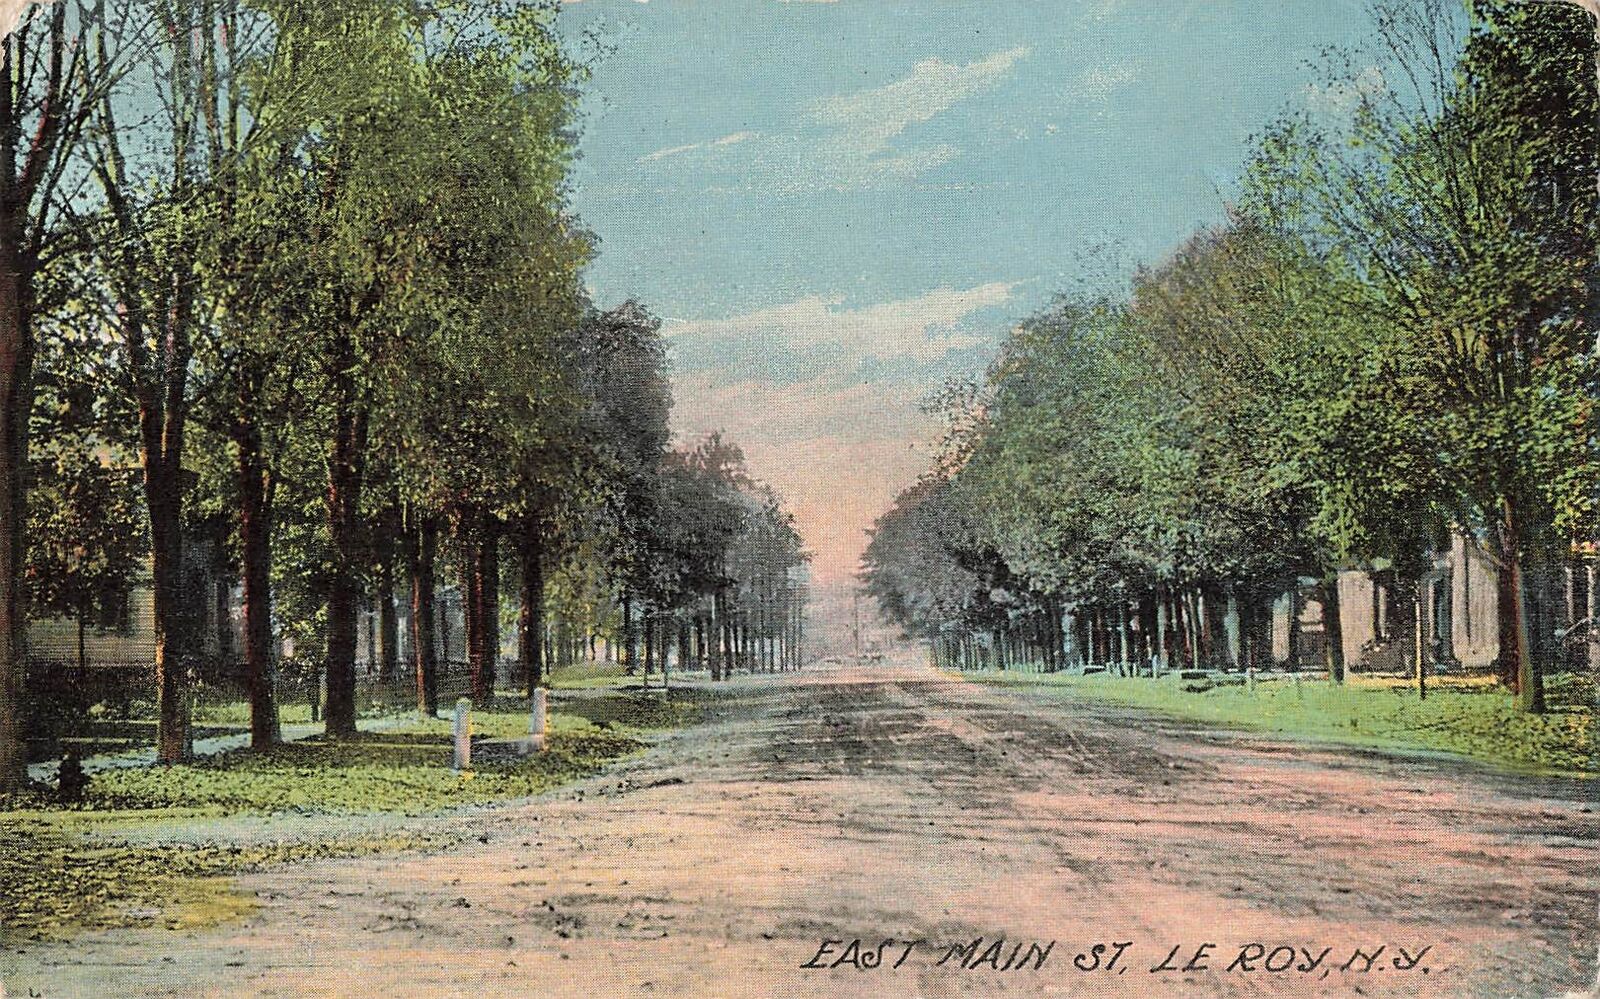 Vintage Postcard Street View East Main St., Leroy, New York 